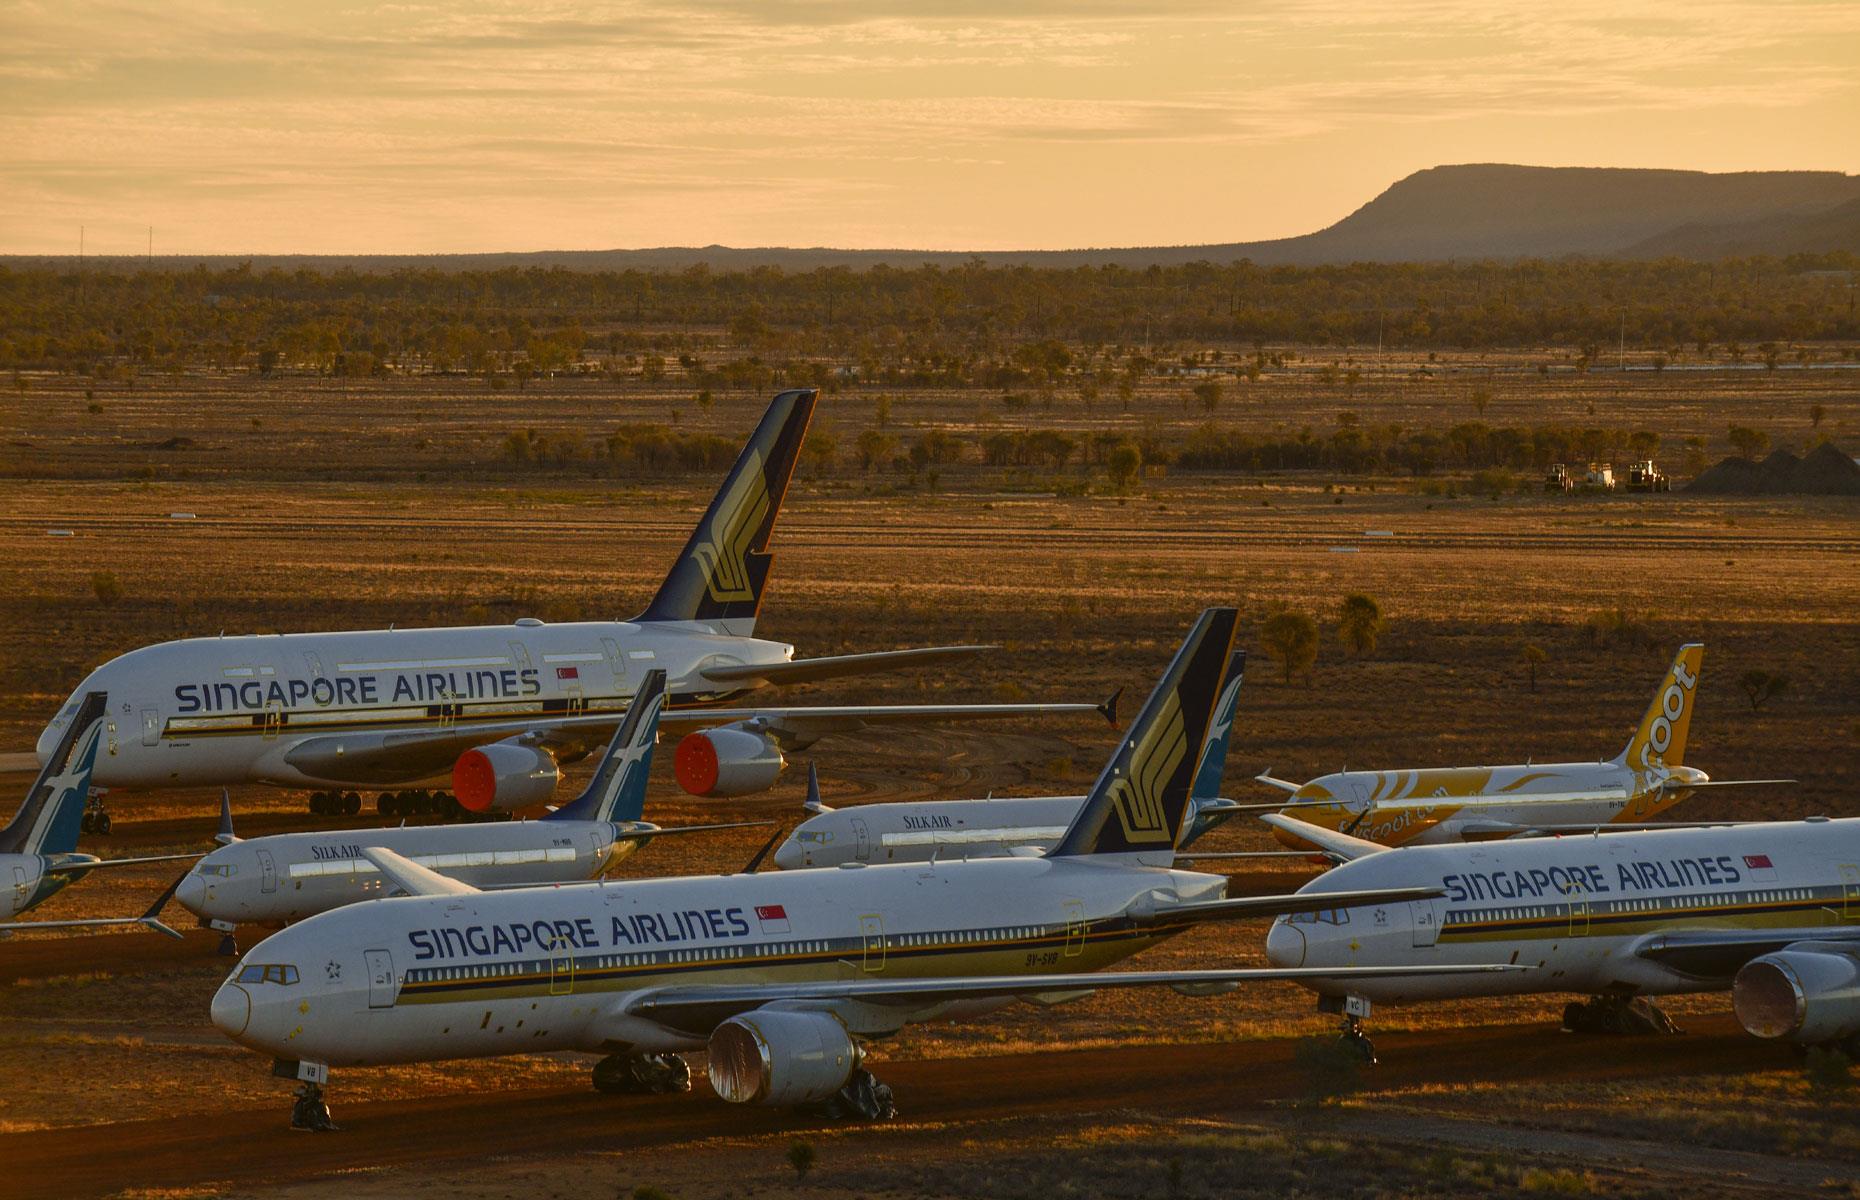 Asia Pacific Aircraft Storage, Northern Territory, Australia